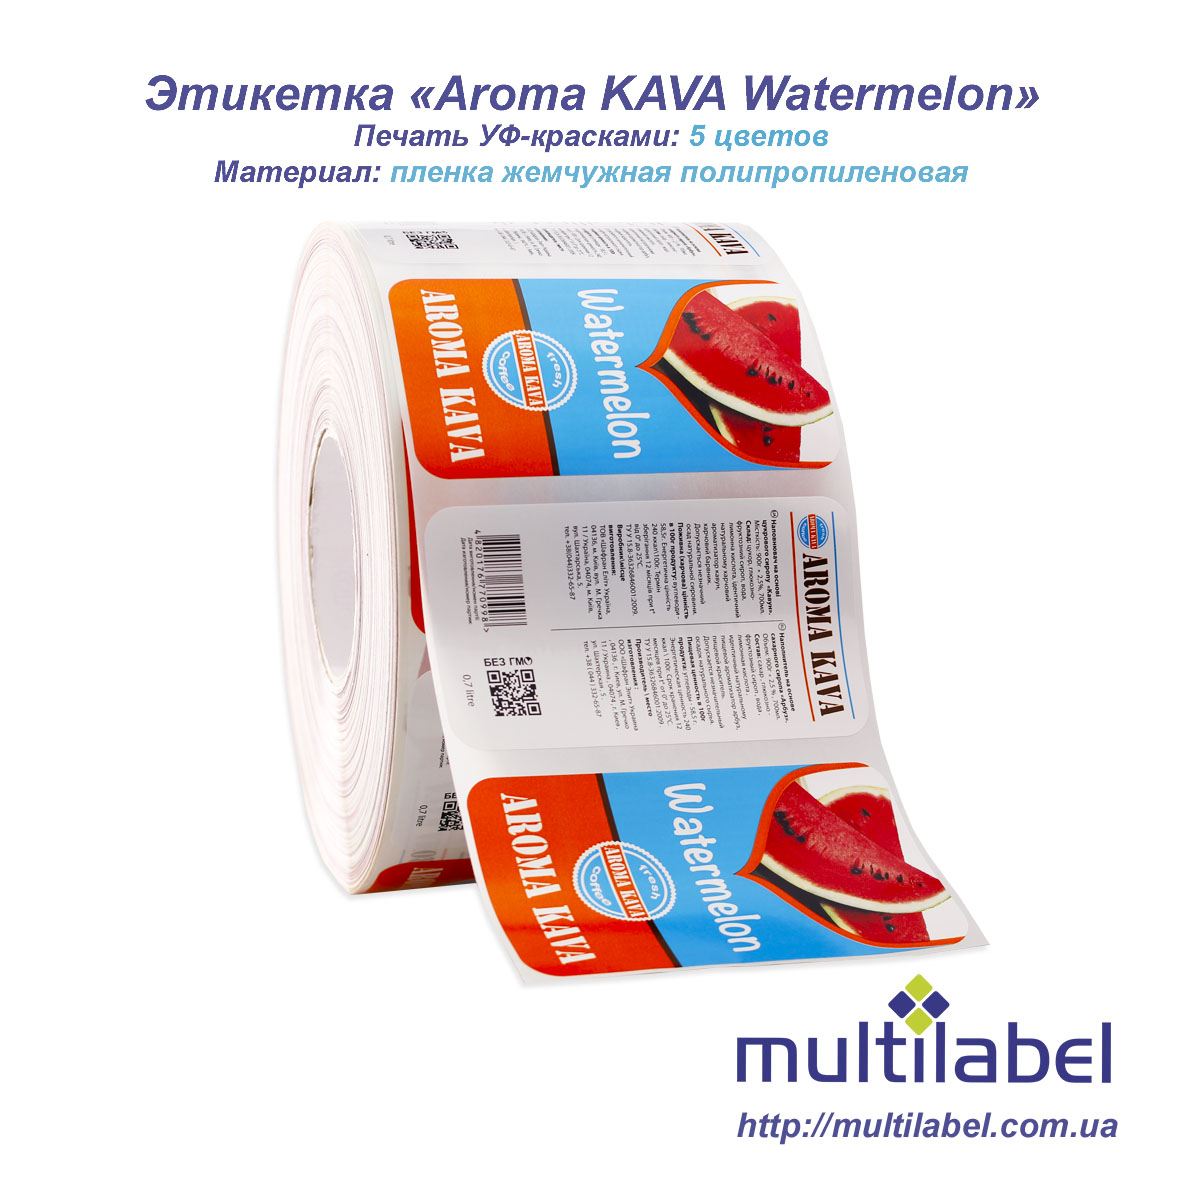 Наклейка на товар "Aroma KAVA Watermelon"